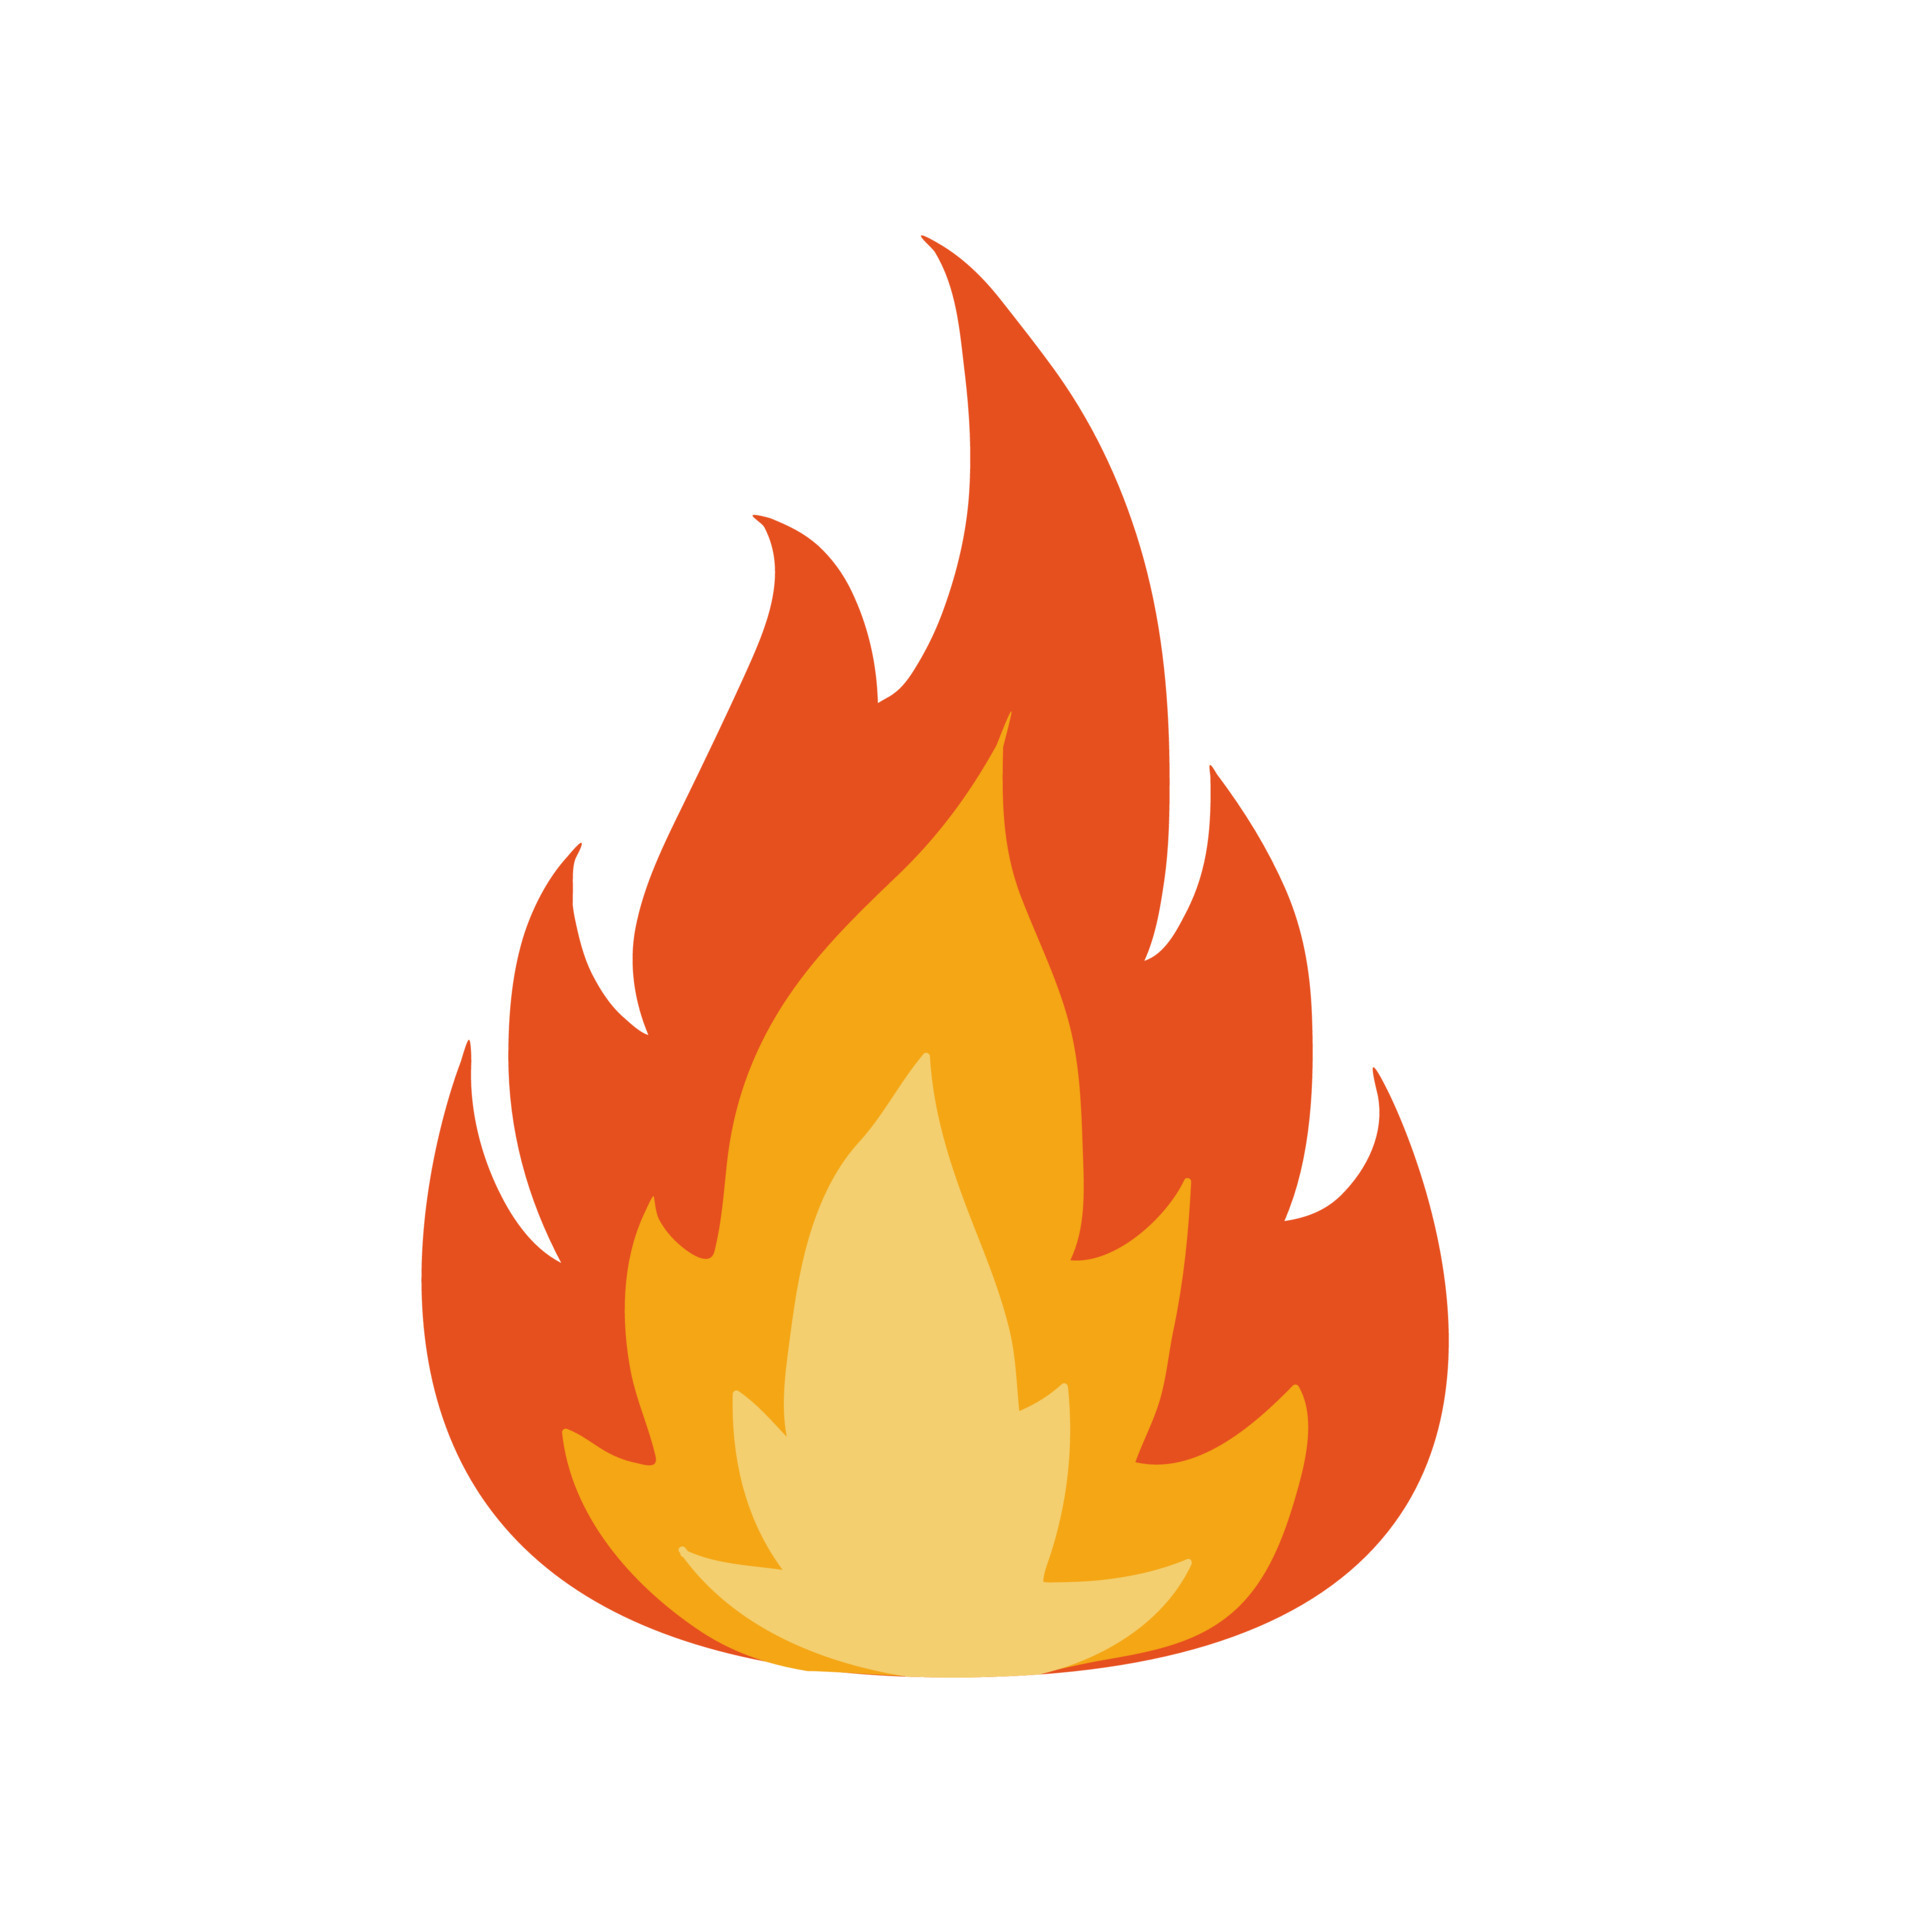 Fire Emoji Illustration Simple Light Dangerous Energy Flame Burns